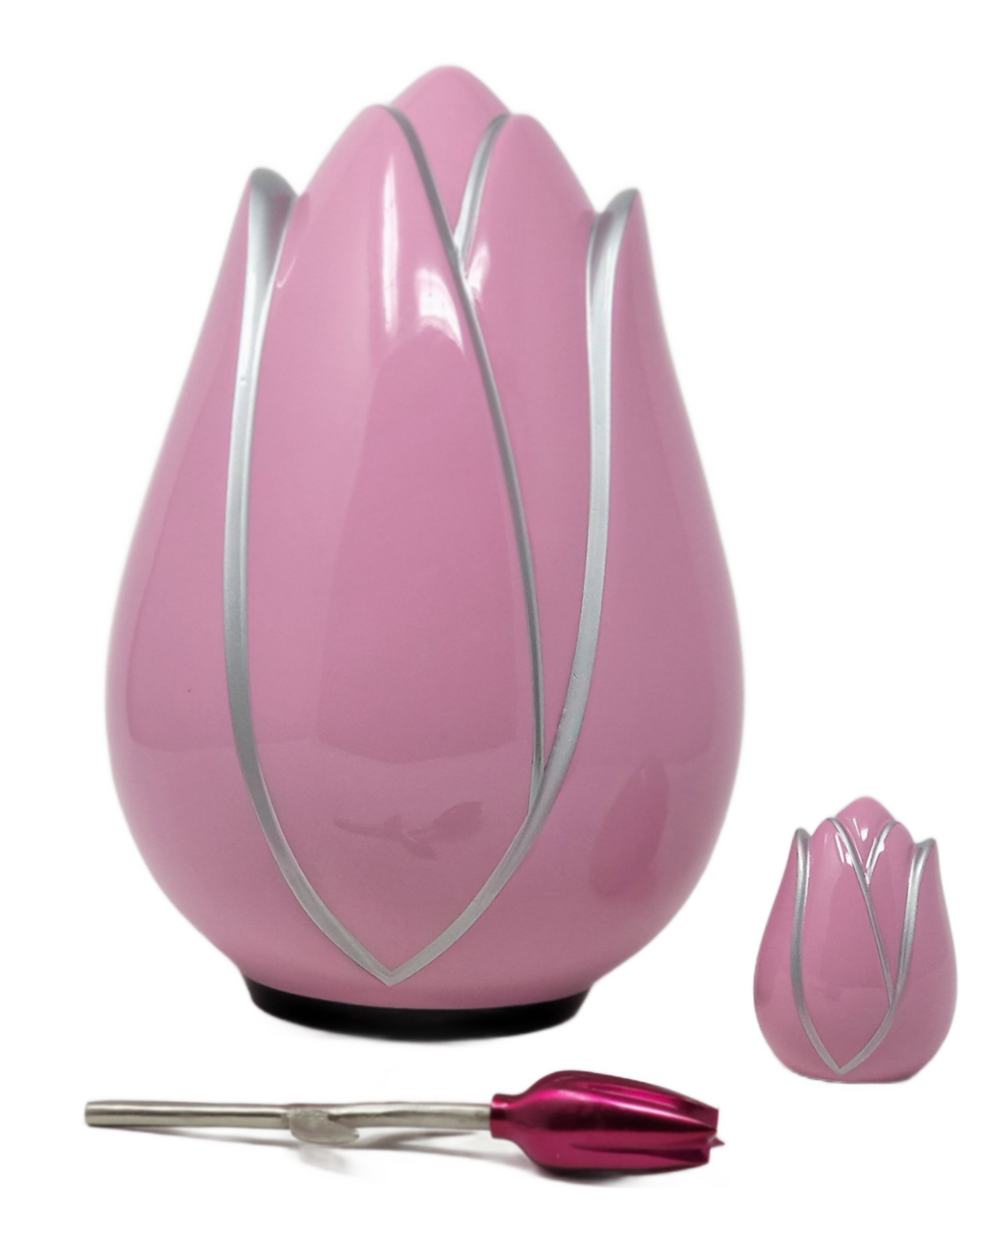 Tulip Series - Fiberglass Cremation Urn, Pink - IUFS102-Pink